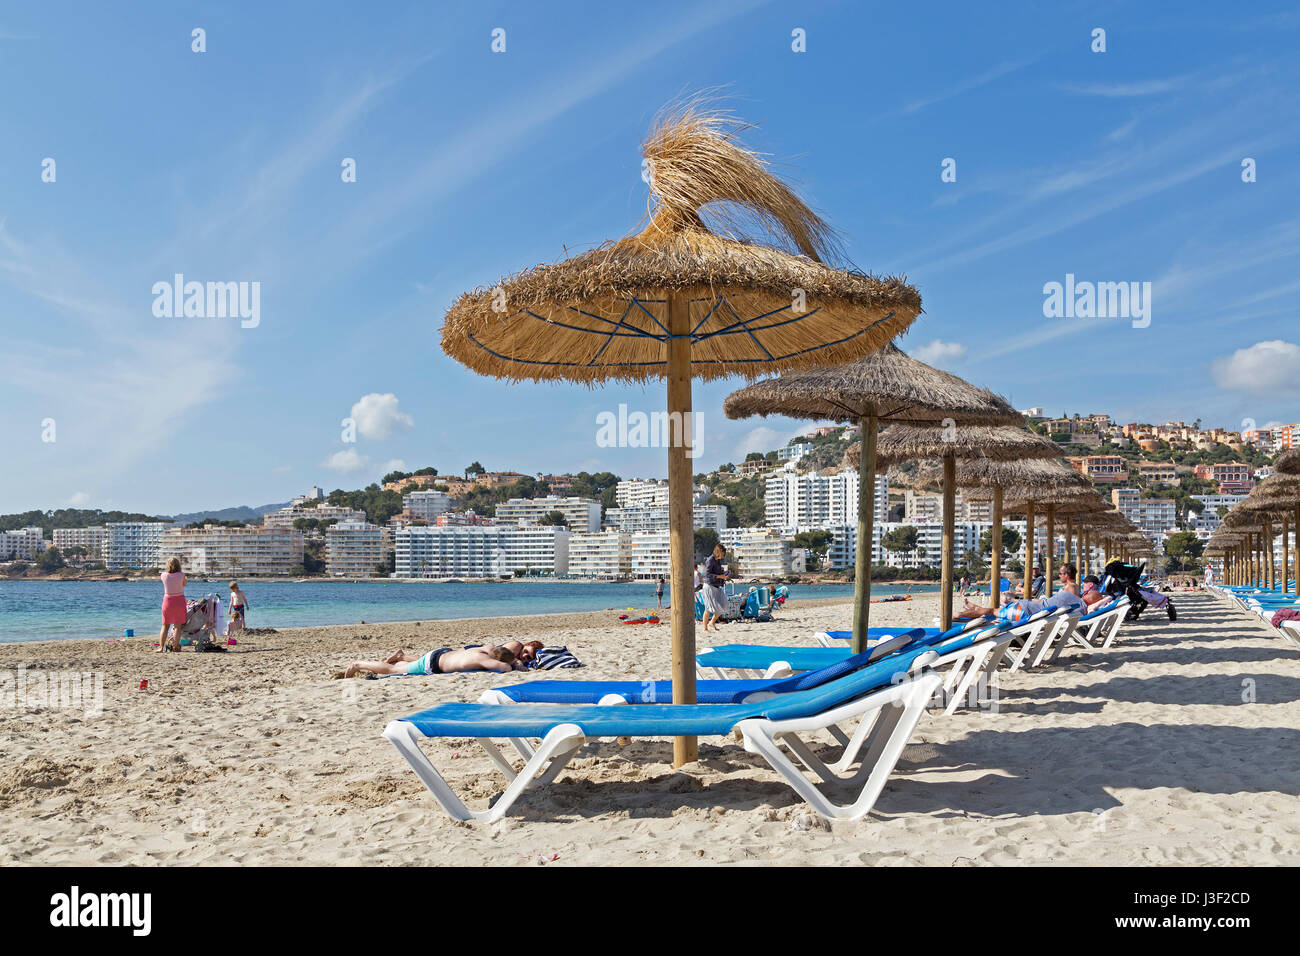 beach of Santa Ponca, Mallorca, Spain Stock Photo